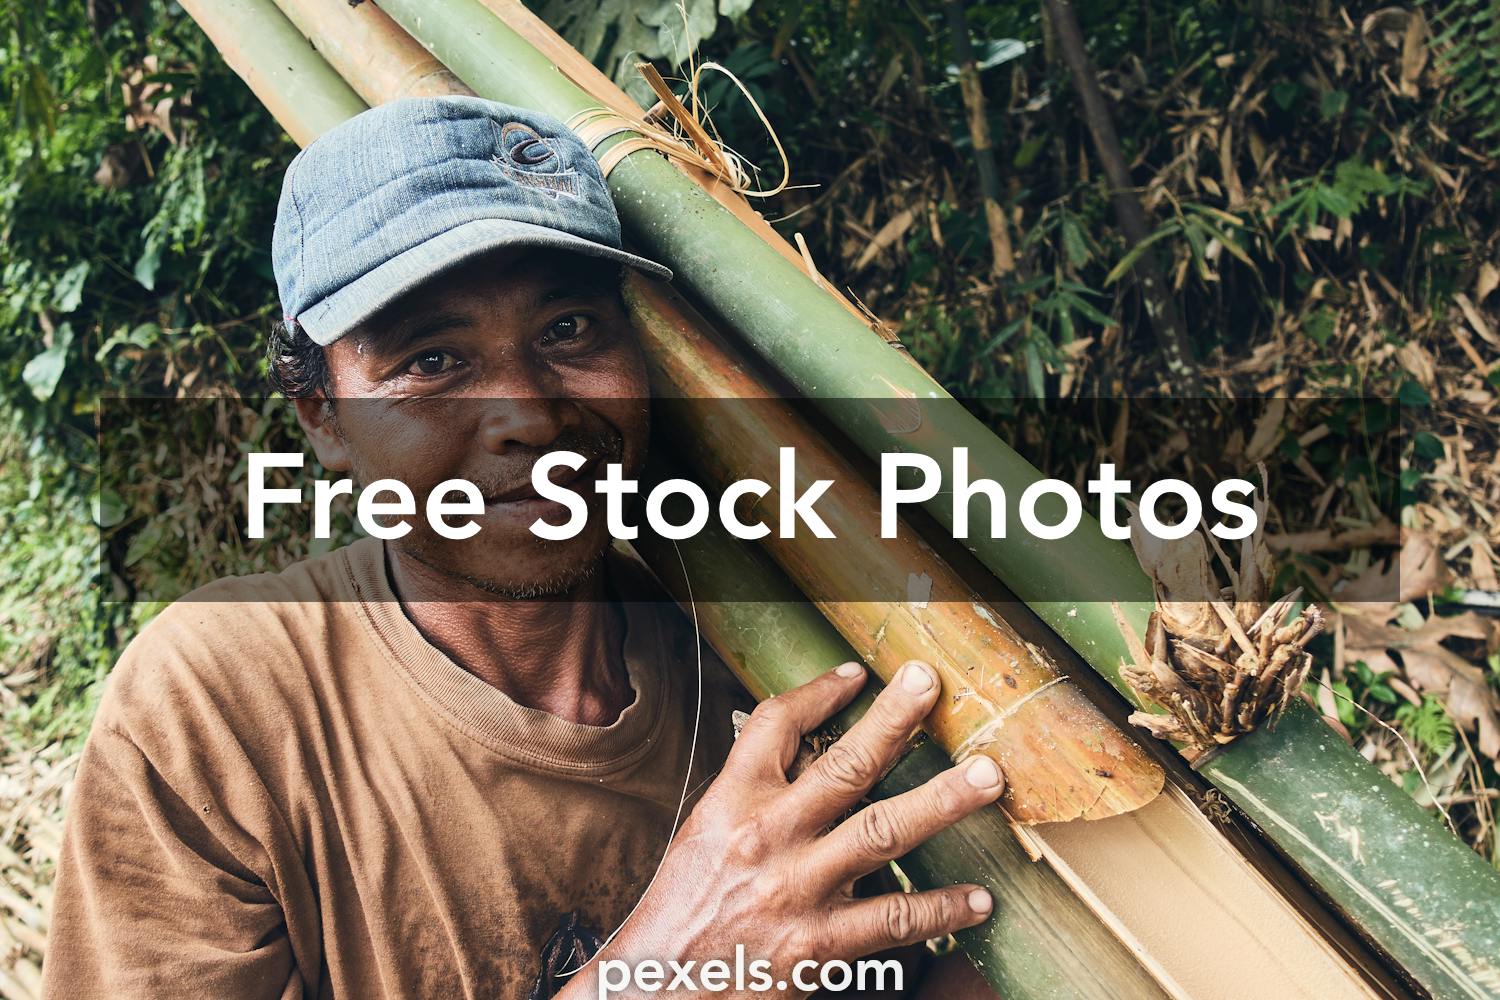 Canes Vs Caps Photos, Download The BEST Free Canes Vs Caps Stock Photos